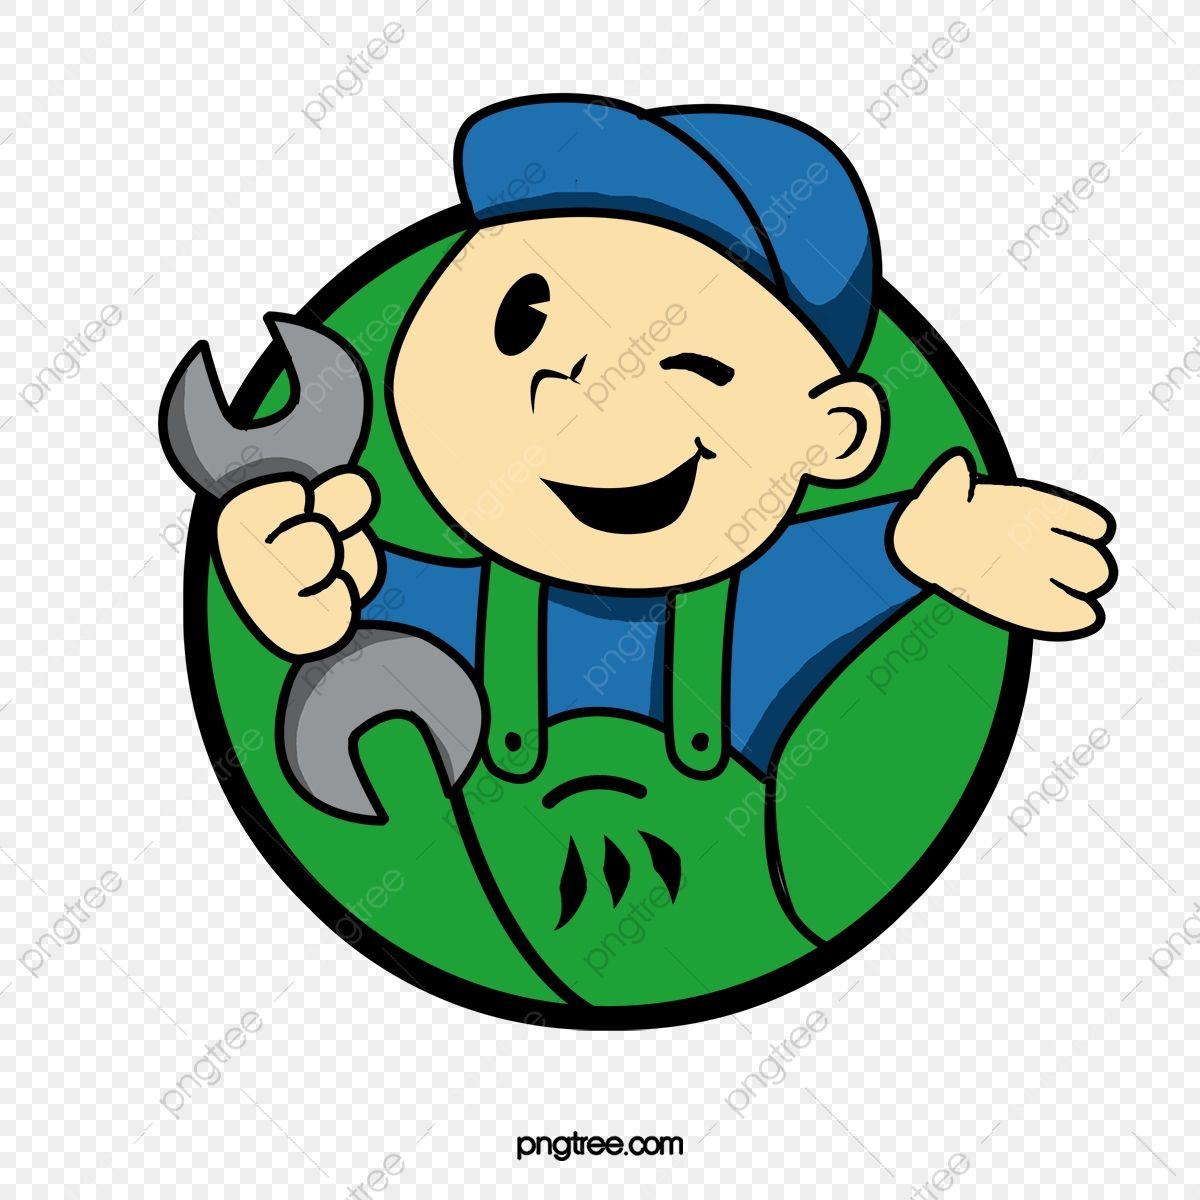 Maintenance Logo - Maintenance Logo, Logo Clipart, Car Repair, Logo PNG Transparent